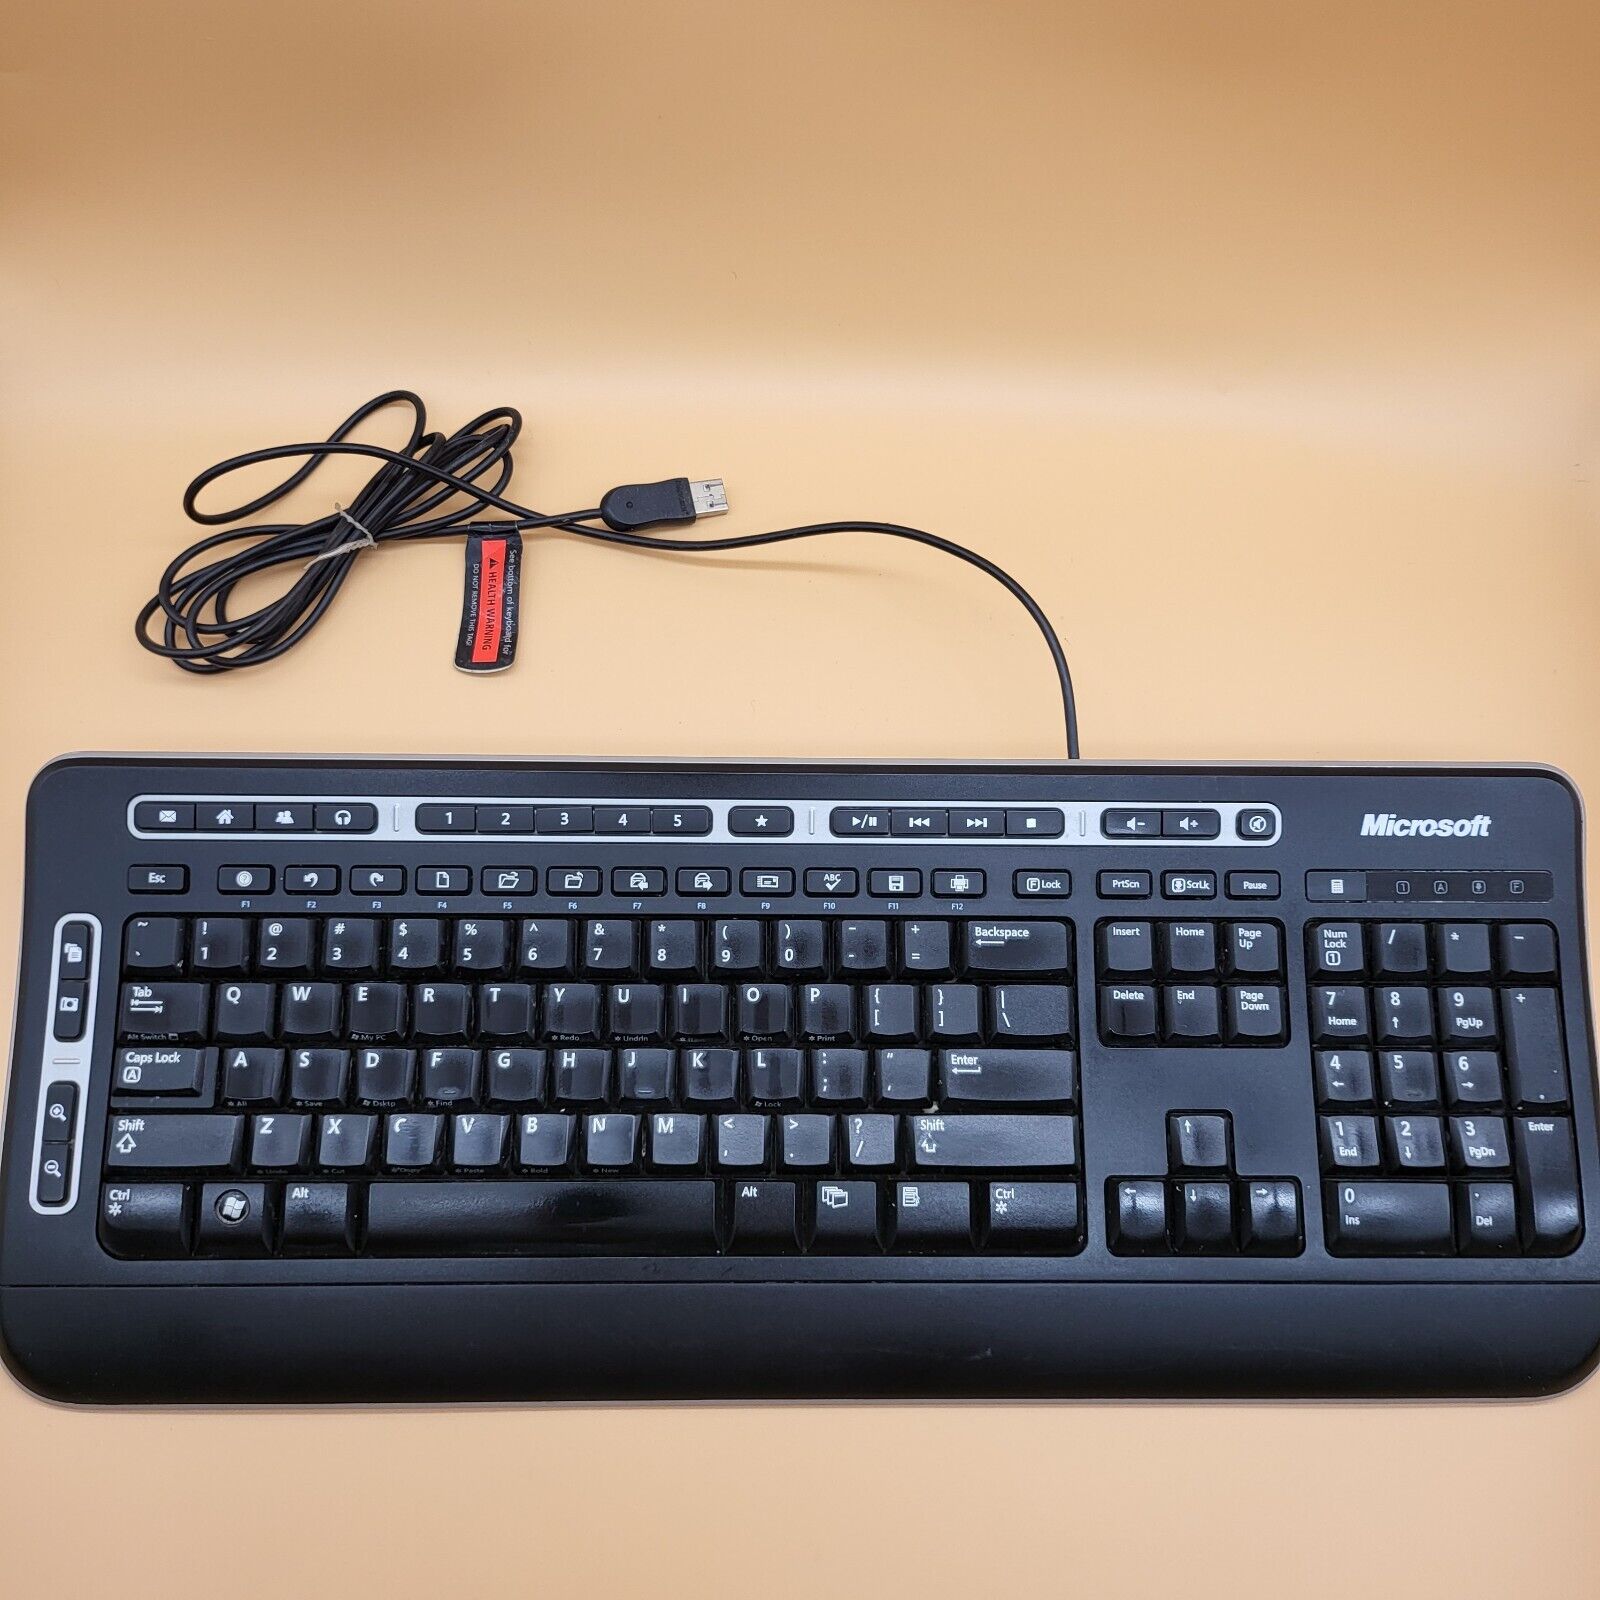 Microsoft Digital Media Keyboard 3000 Wired USB Model 1343